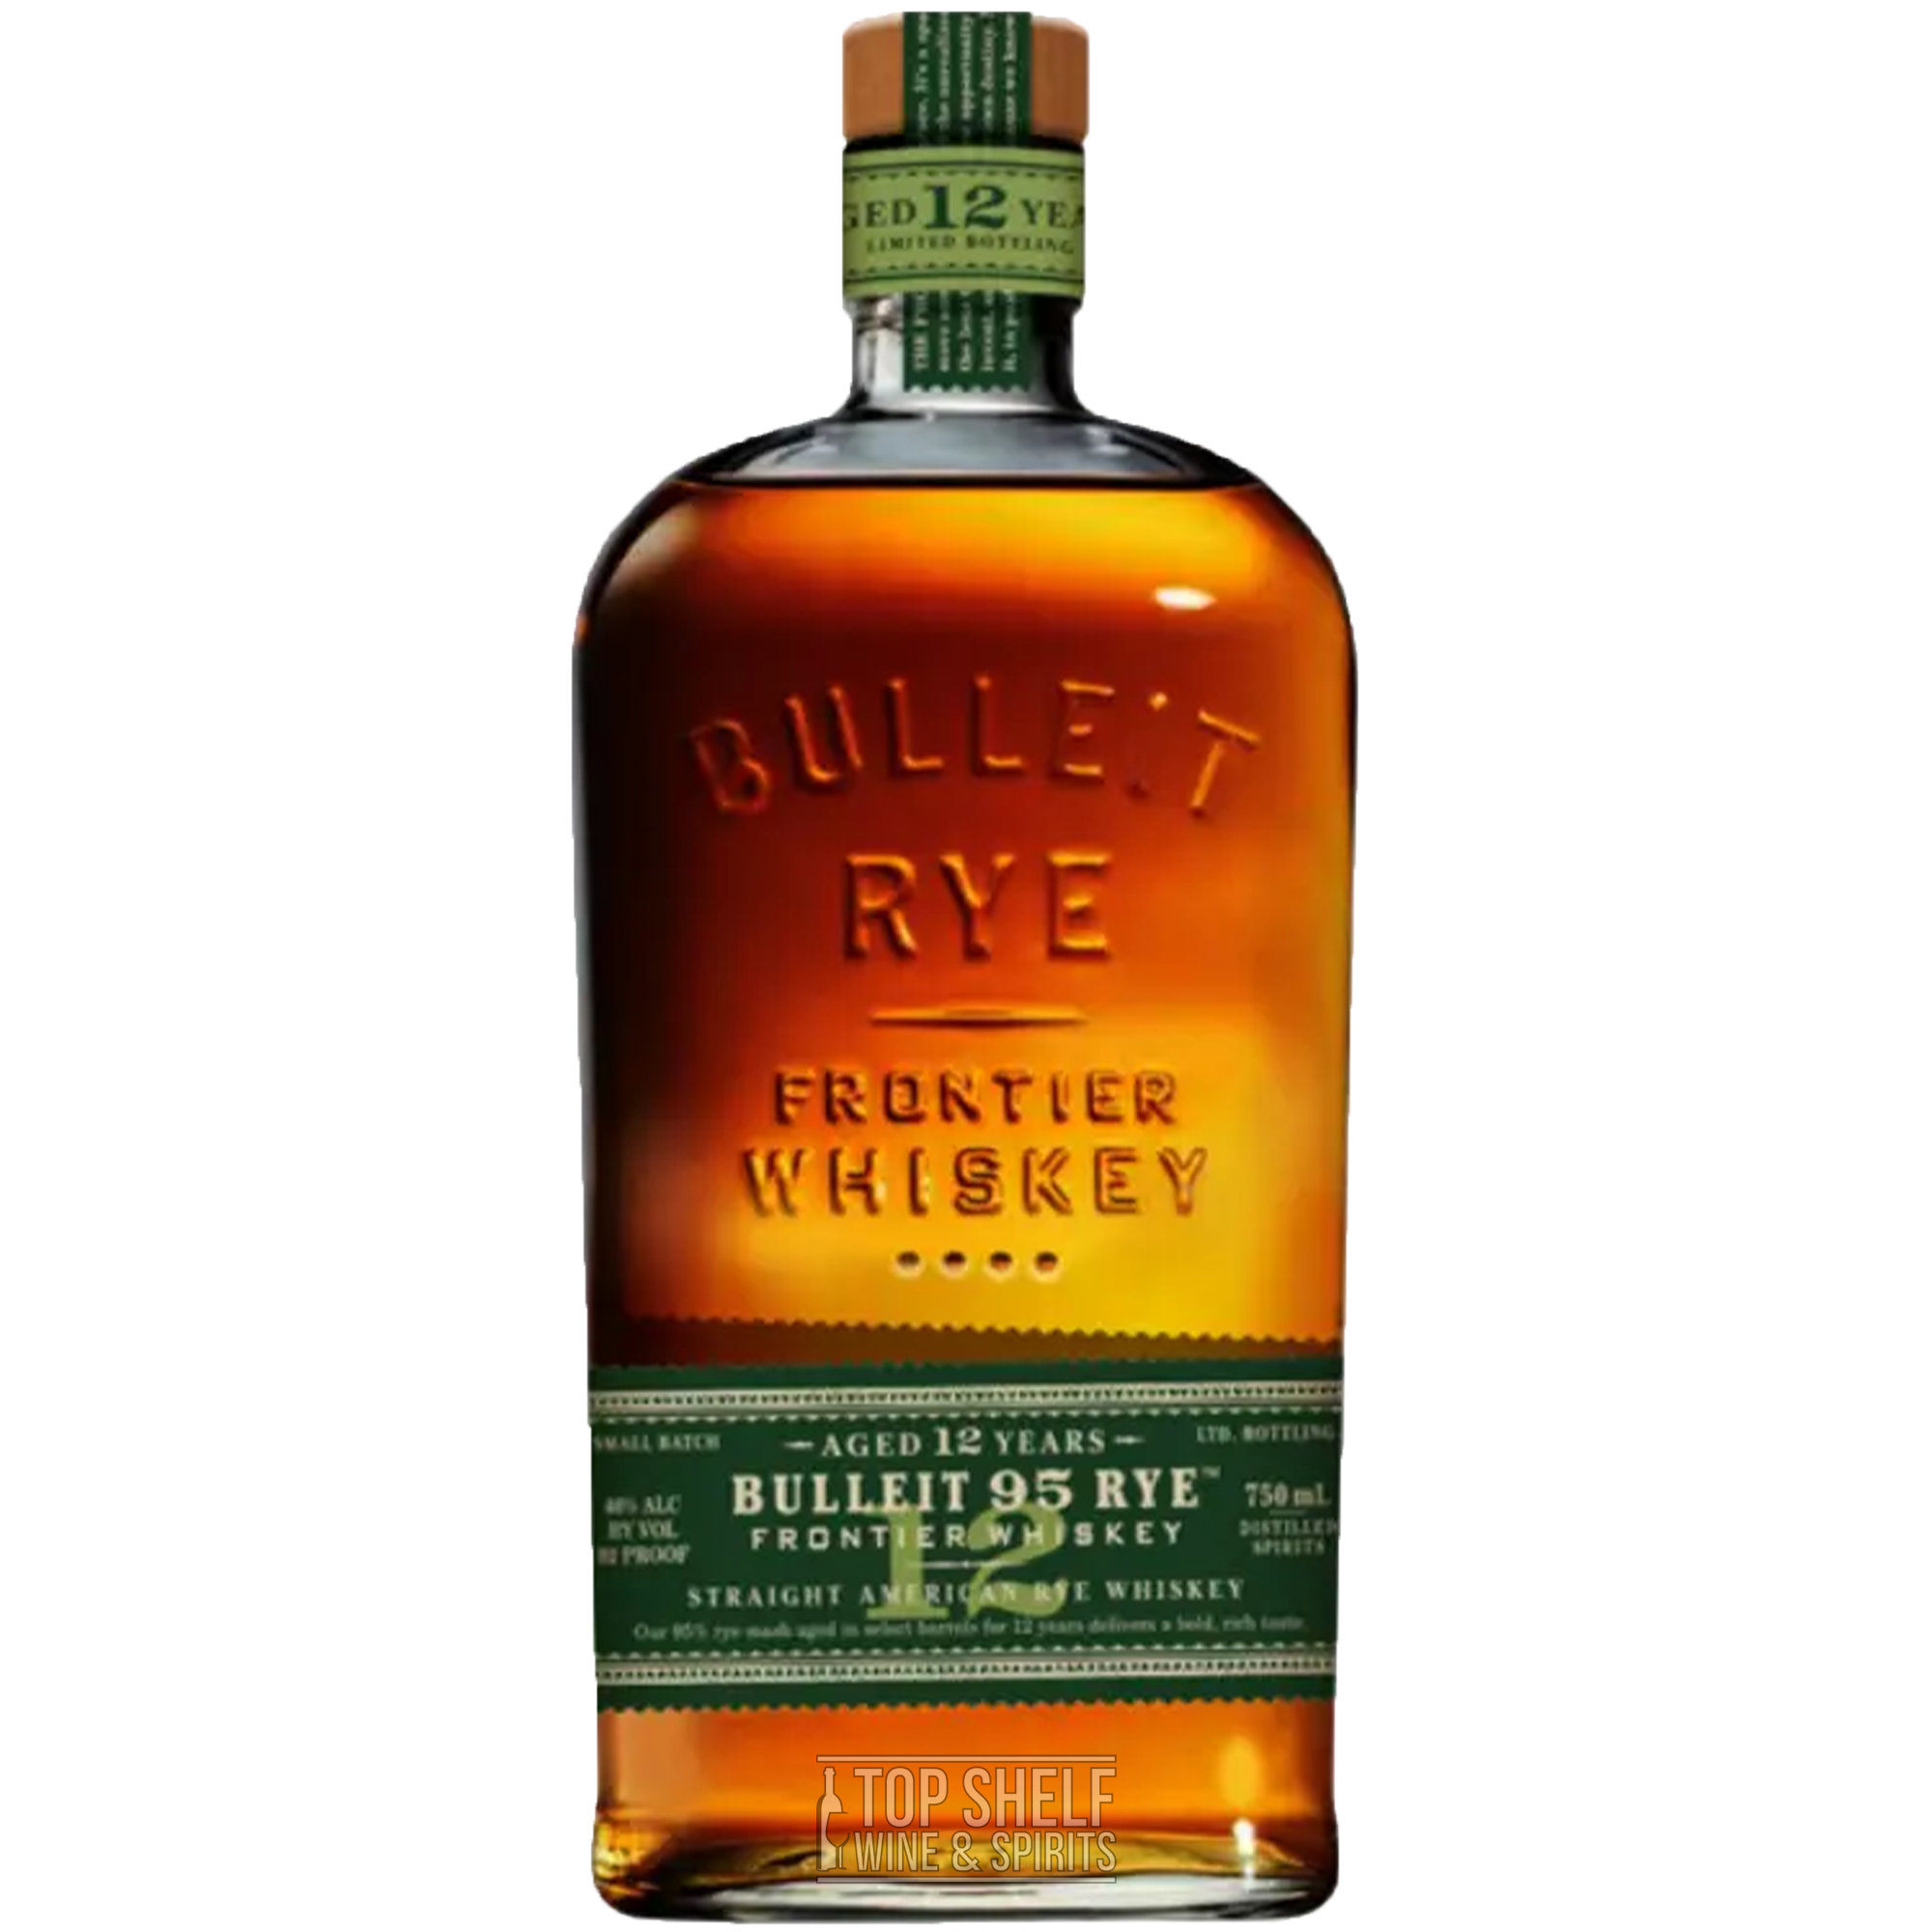 Bulleit Rye 12 Year Frontier Whiskey